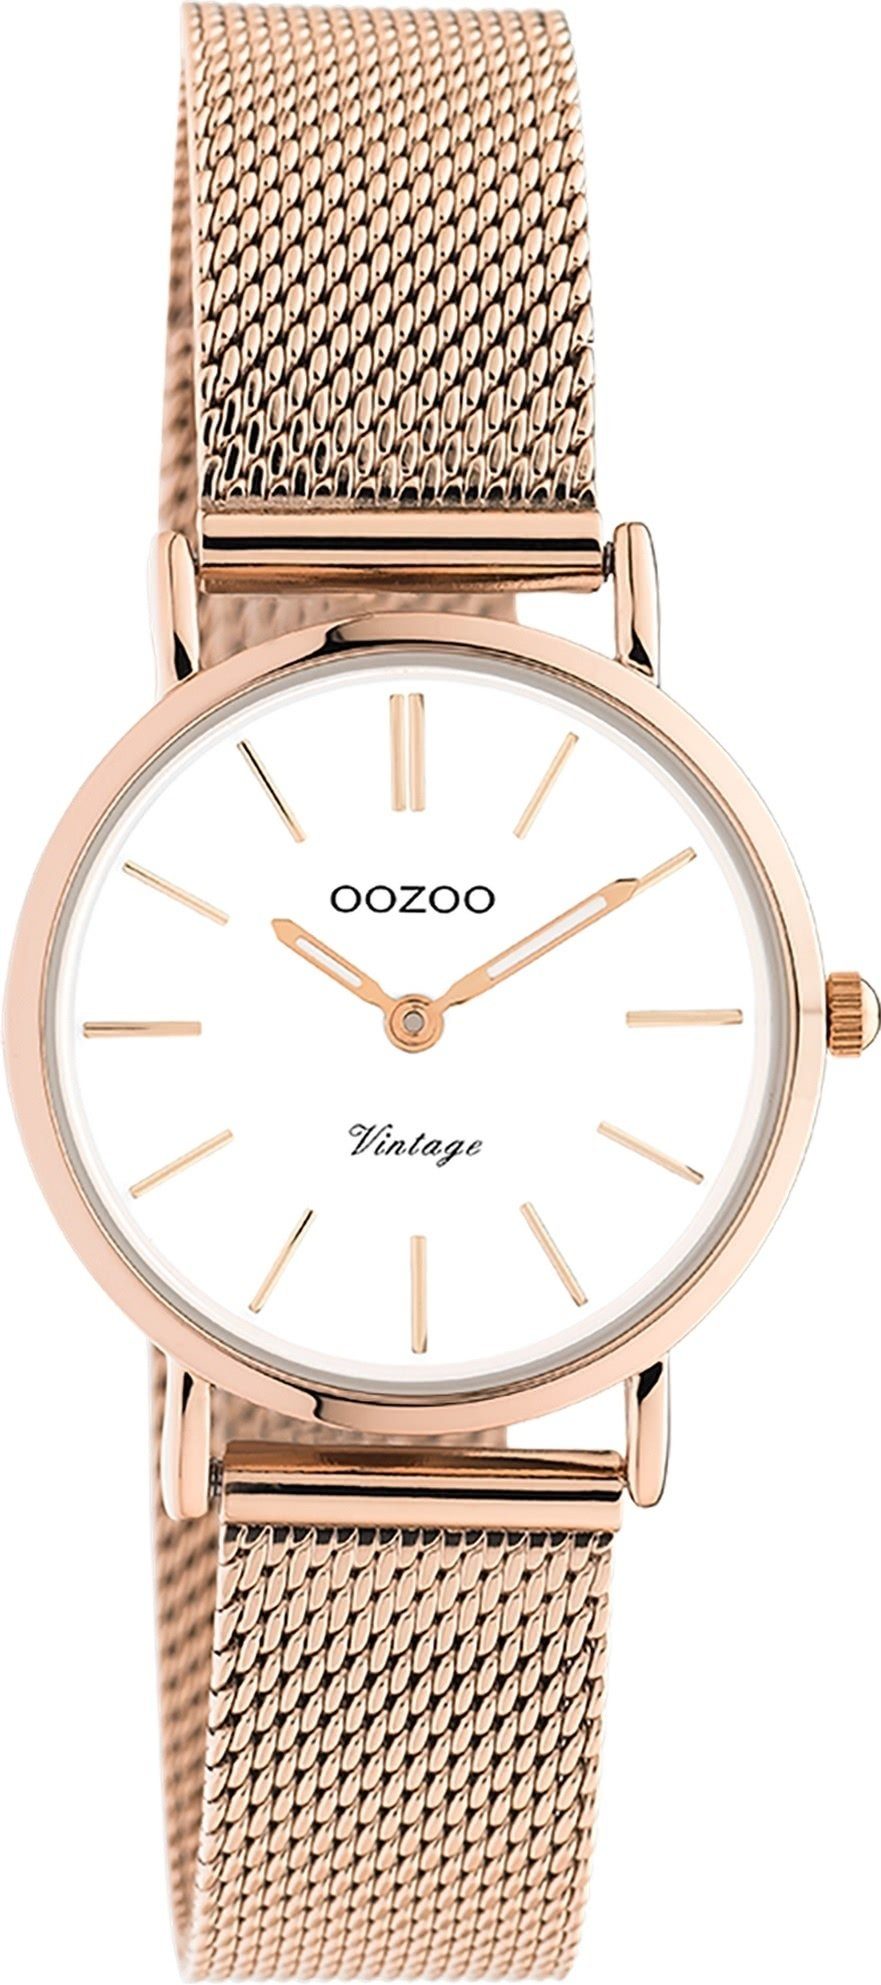 OOZOO Quarzuhr Oozoo Unisex Armbanduhr roségold Analog, Damen, Herrenuhr rund, klein (ca 28mm) Edelstahlarmband, Elegant-Style | Quarzuhren